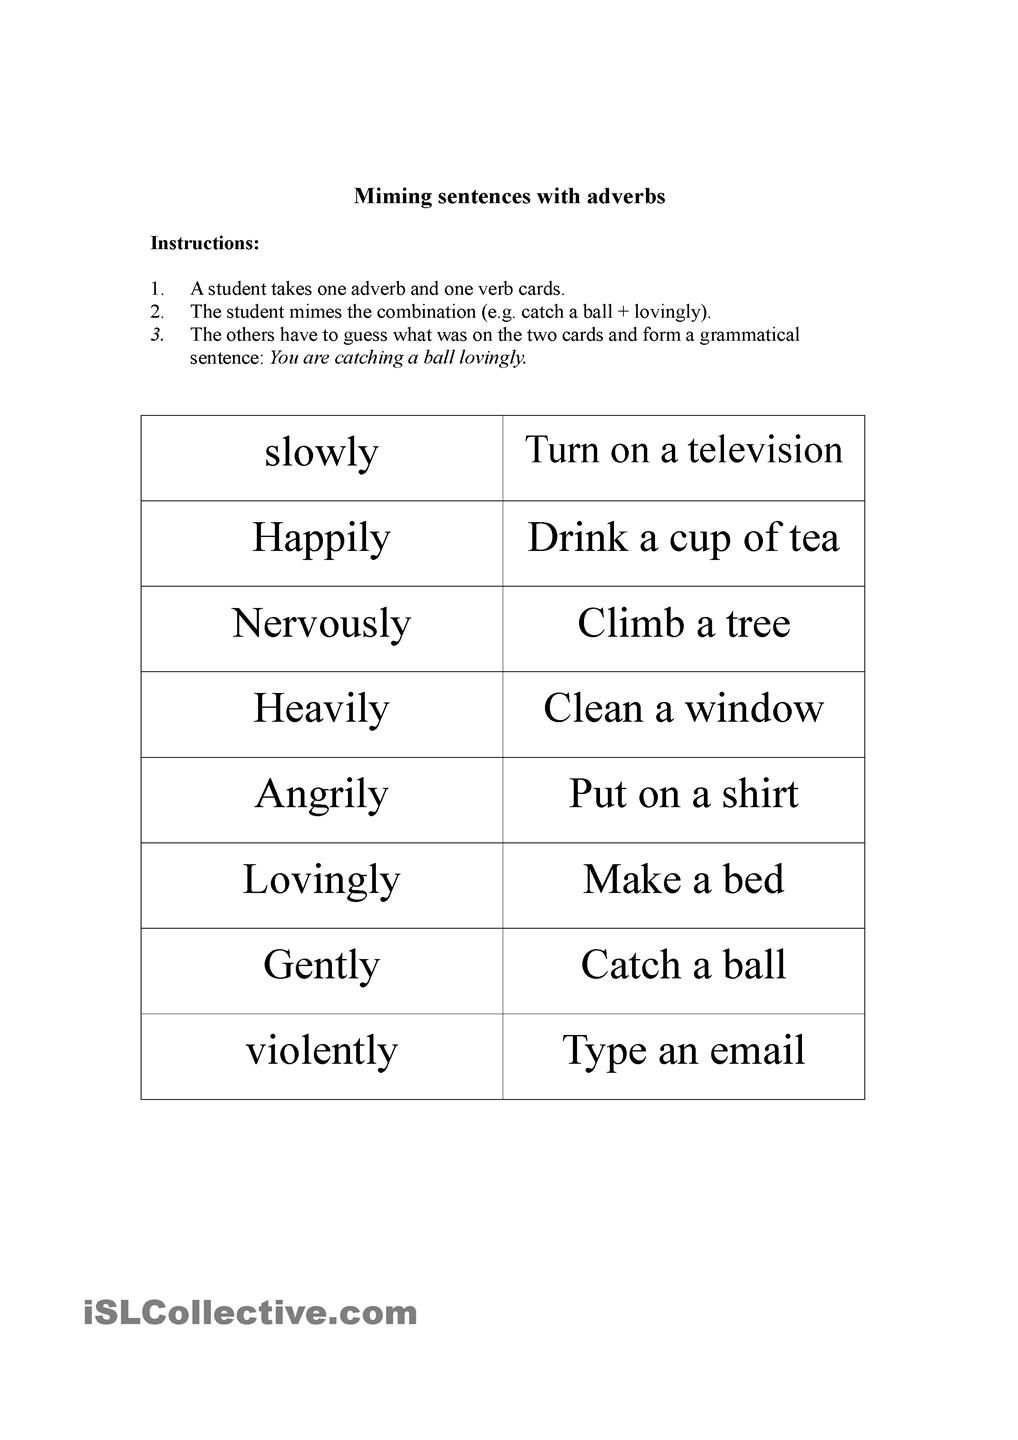 miming-game-adverbs-adverbs-adverb-activities-adjectives-lesson-adverbworksheets